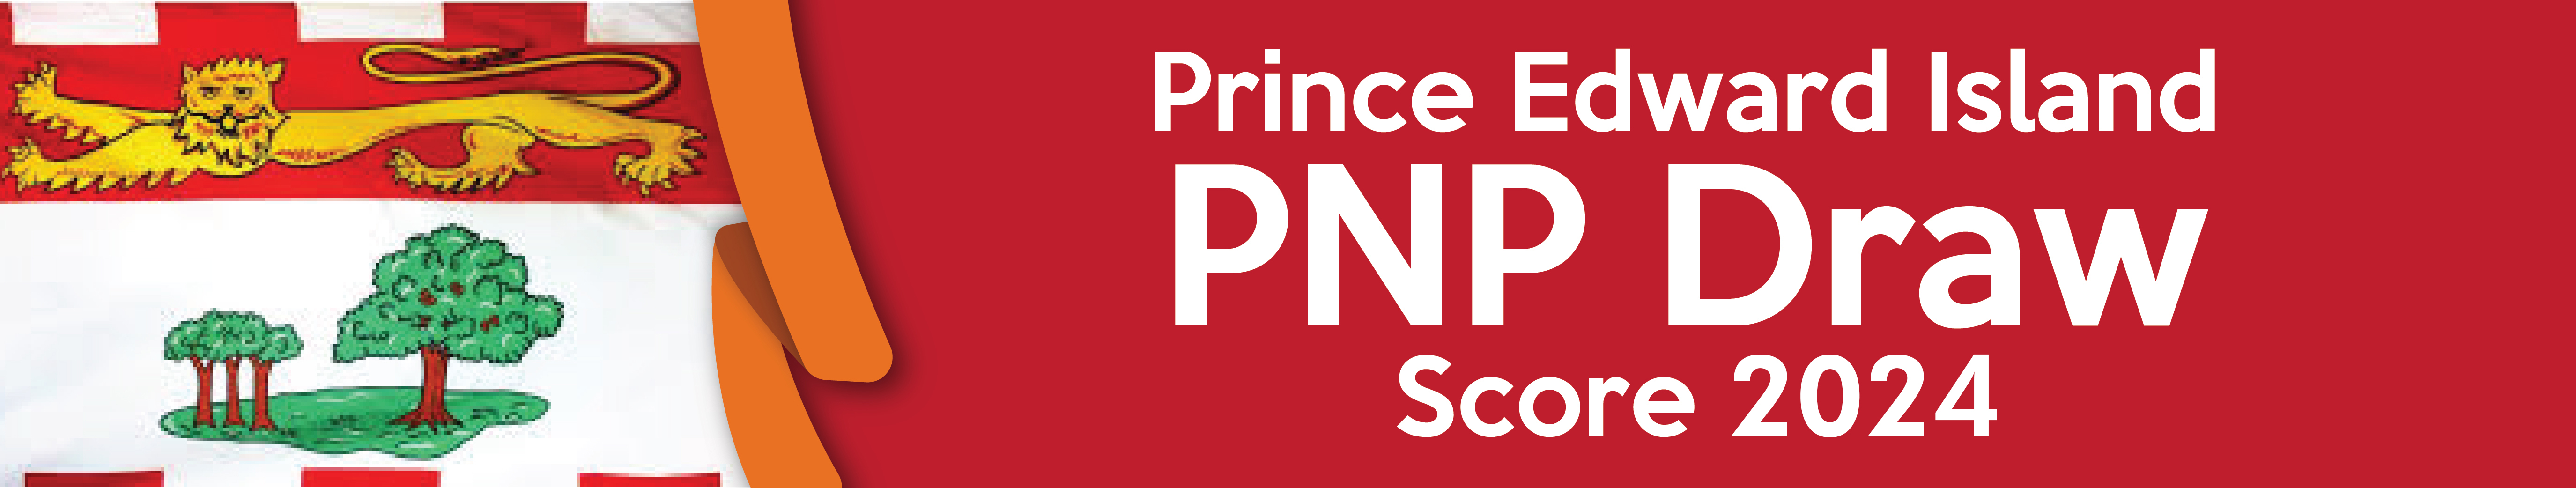 Prince Edward Island PNP Draw Score